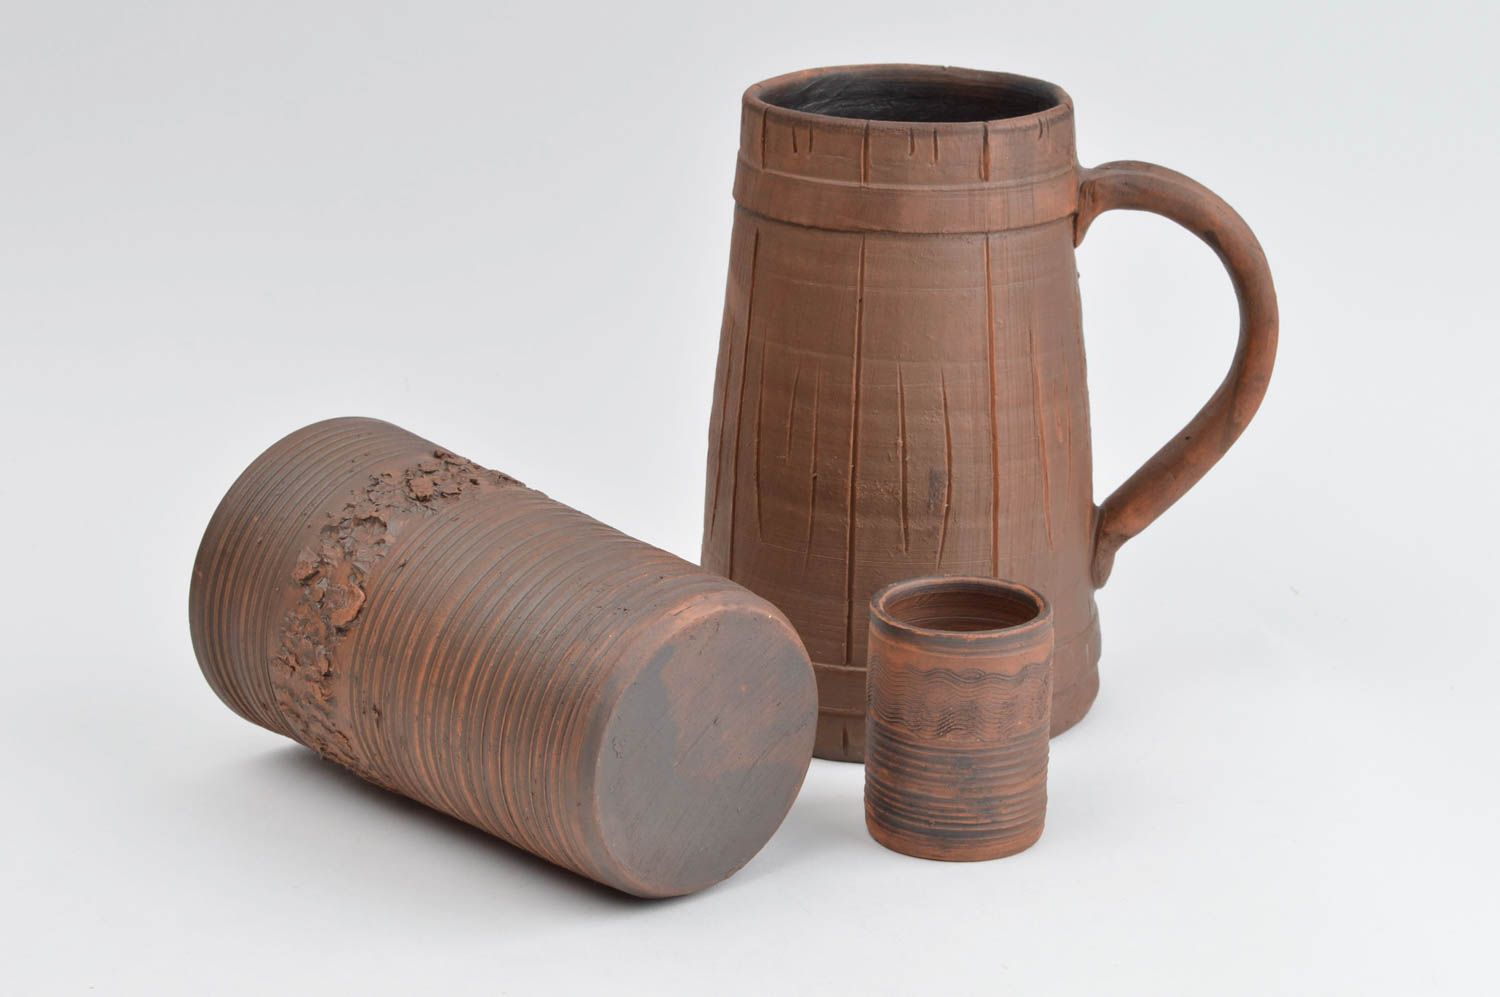 Ceramic tableware designer kitchenware eco-friendly dishes beer mug gift ideas photo 4